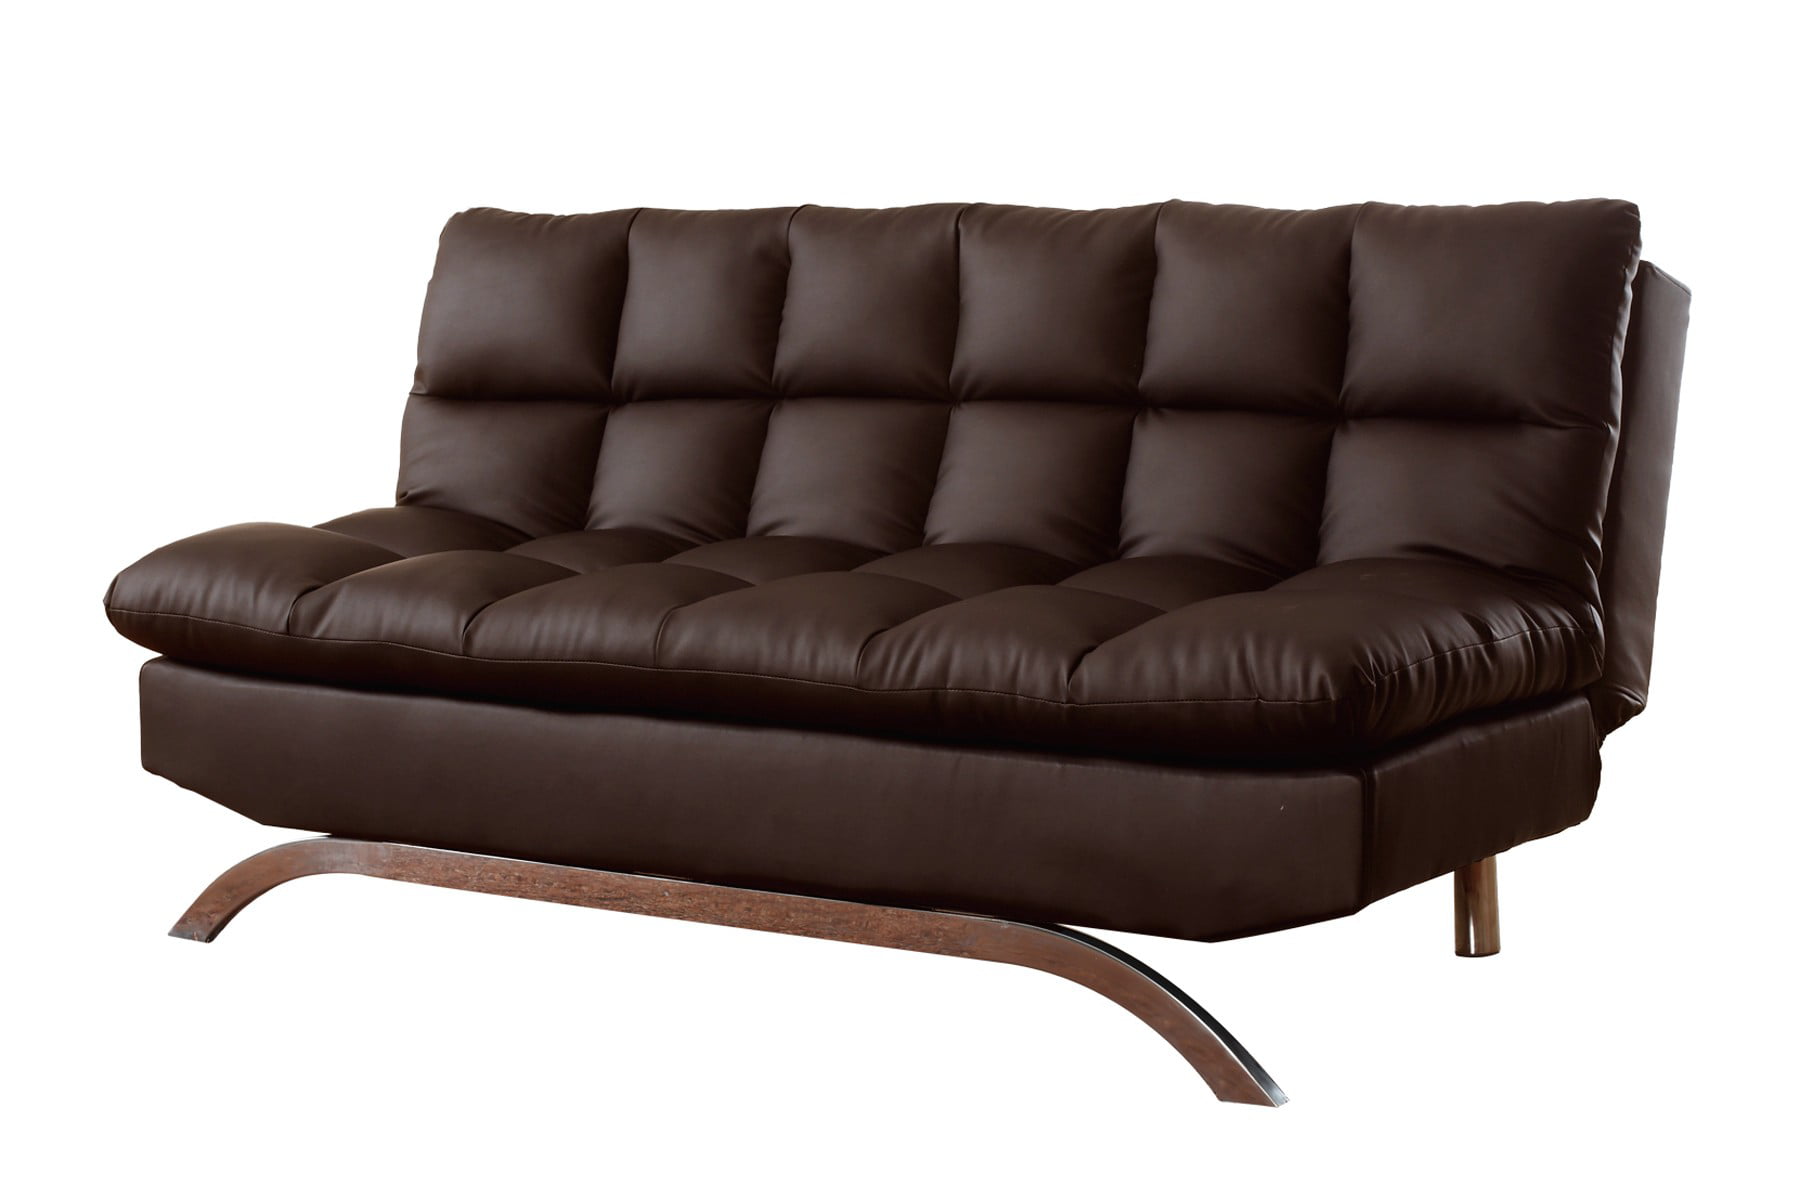 jackson leather foldable futon sofa bed